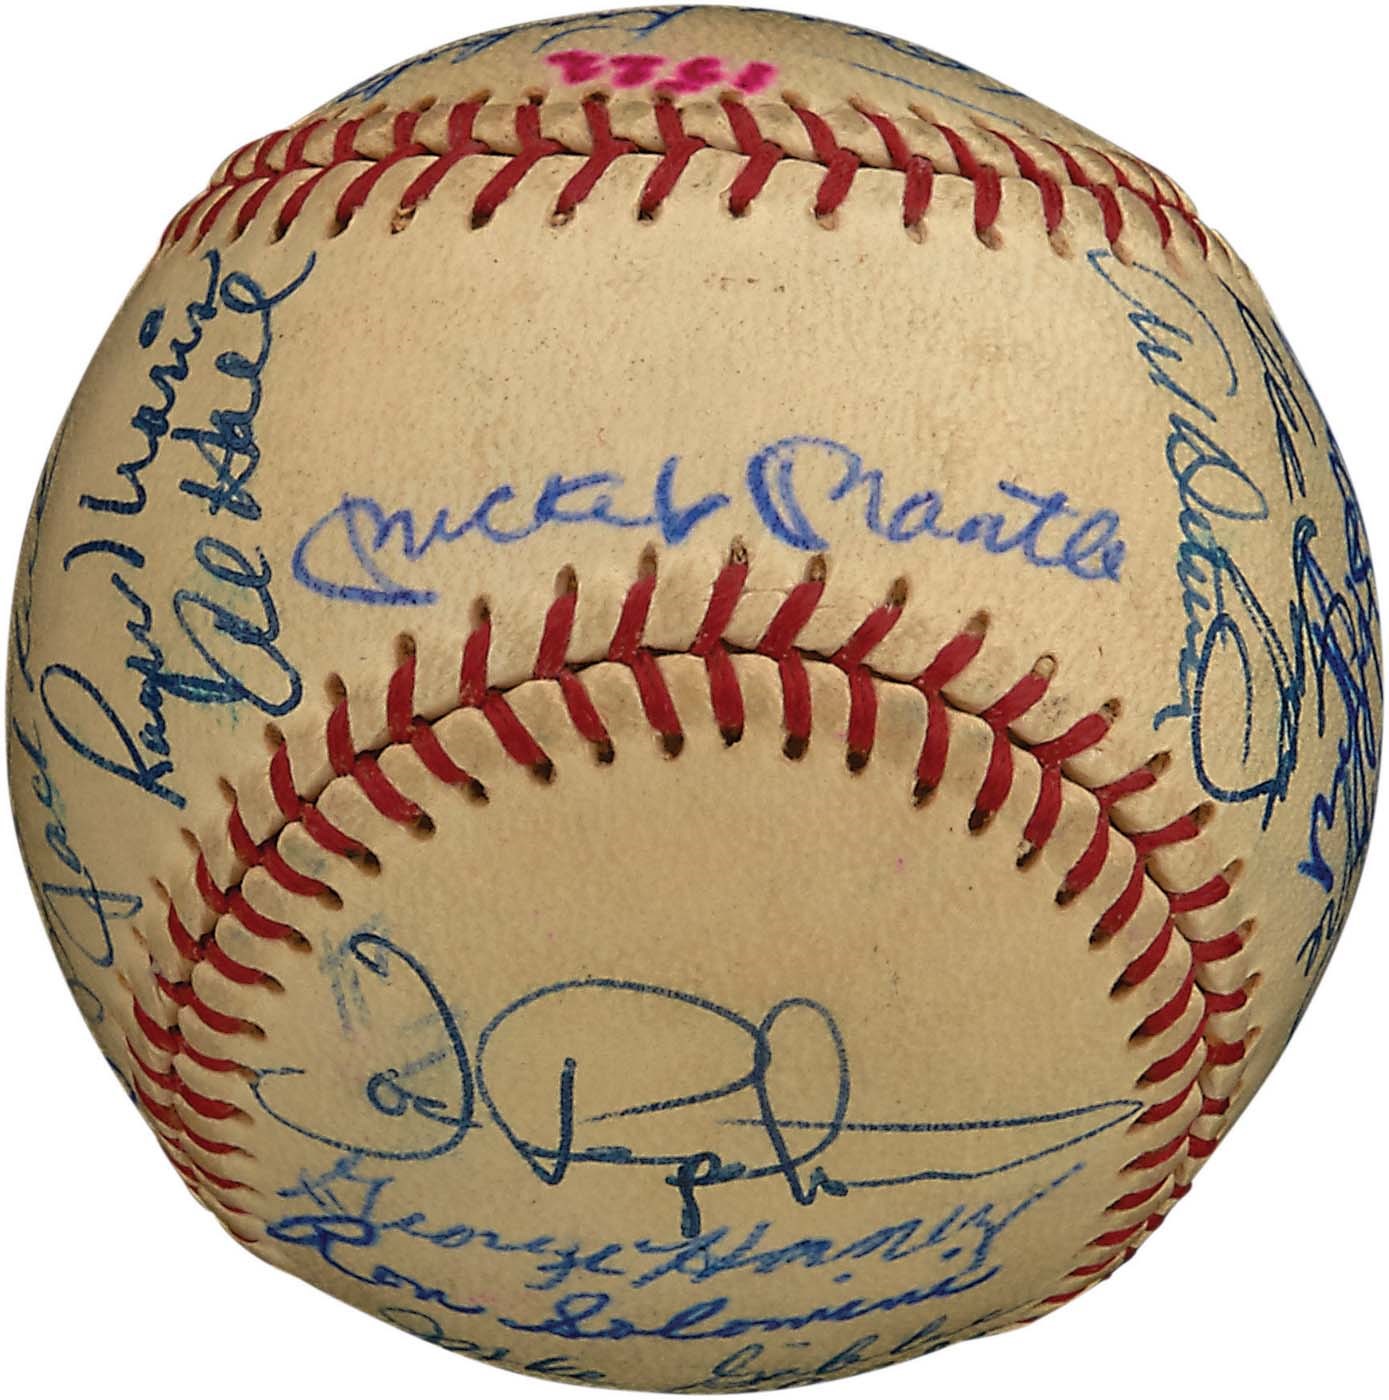 The John O'connor Signed Baseball Collection - 1962 World Champion New York Yankees Team-Signed Baseball - Zero Clubhouse (PSA)